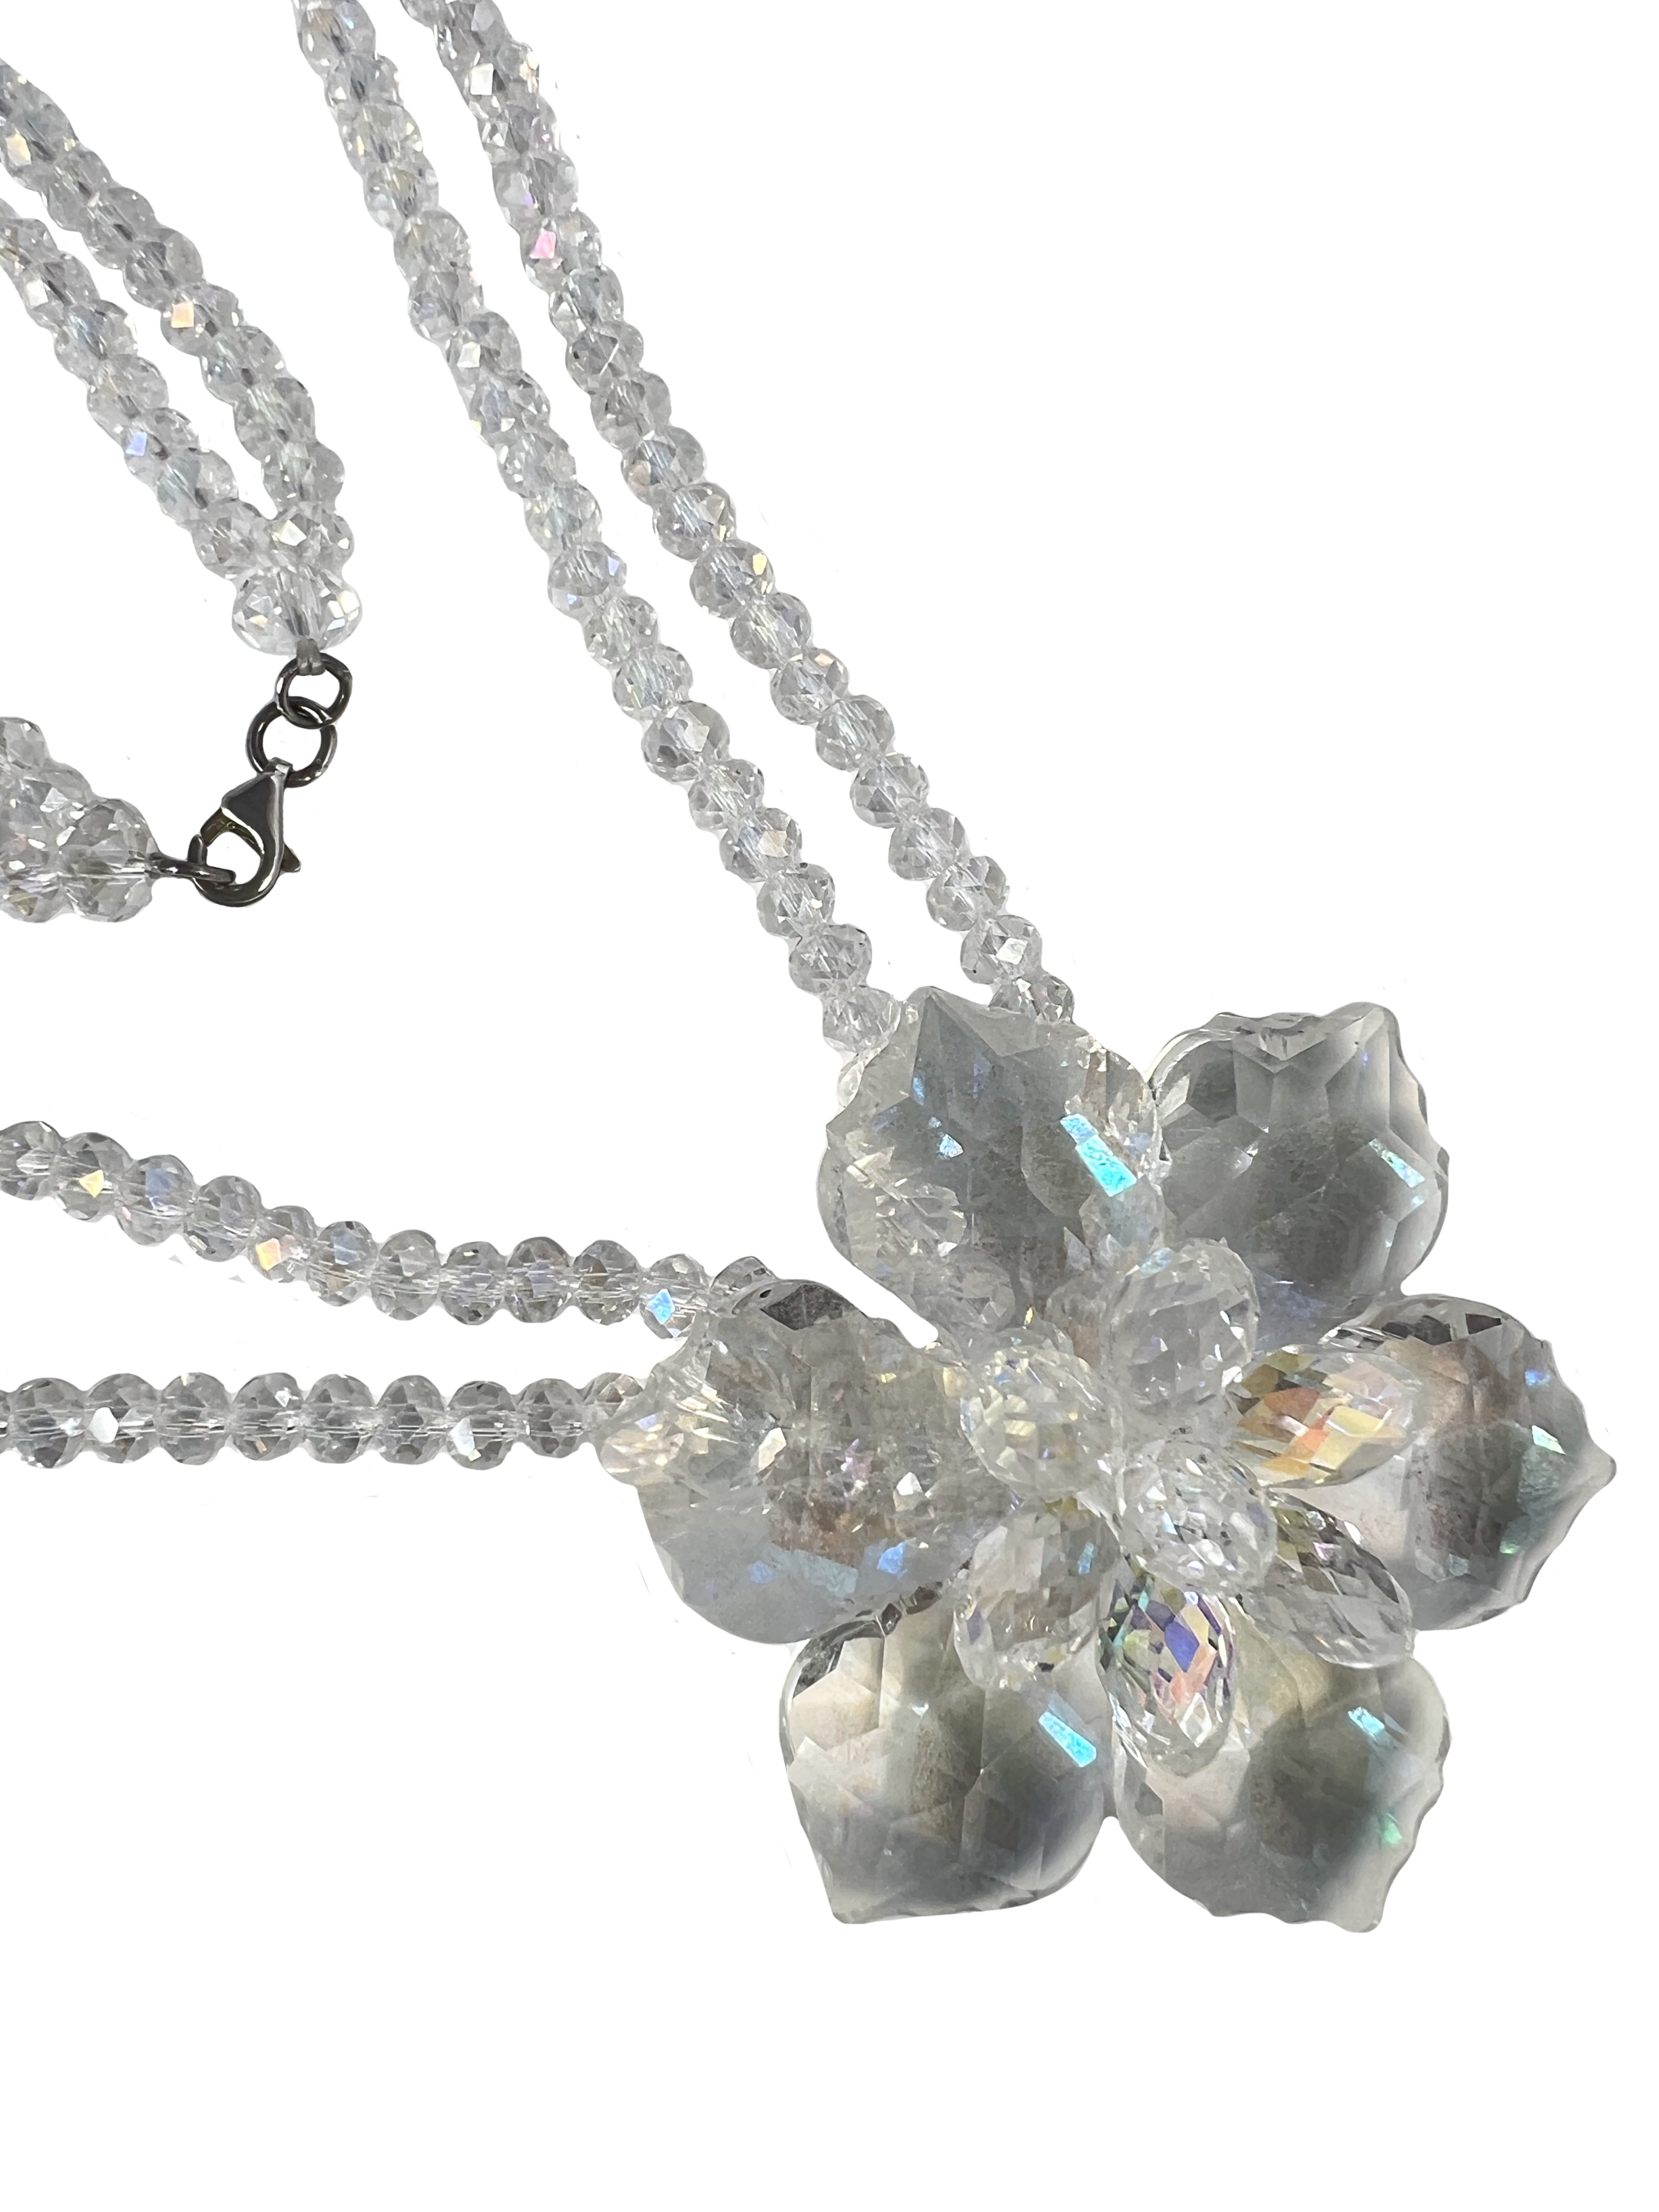 Collar de plata de cristales con flor.